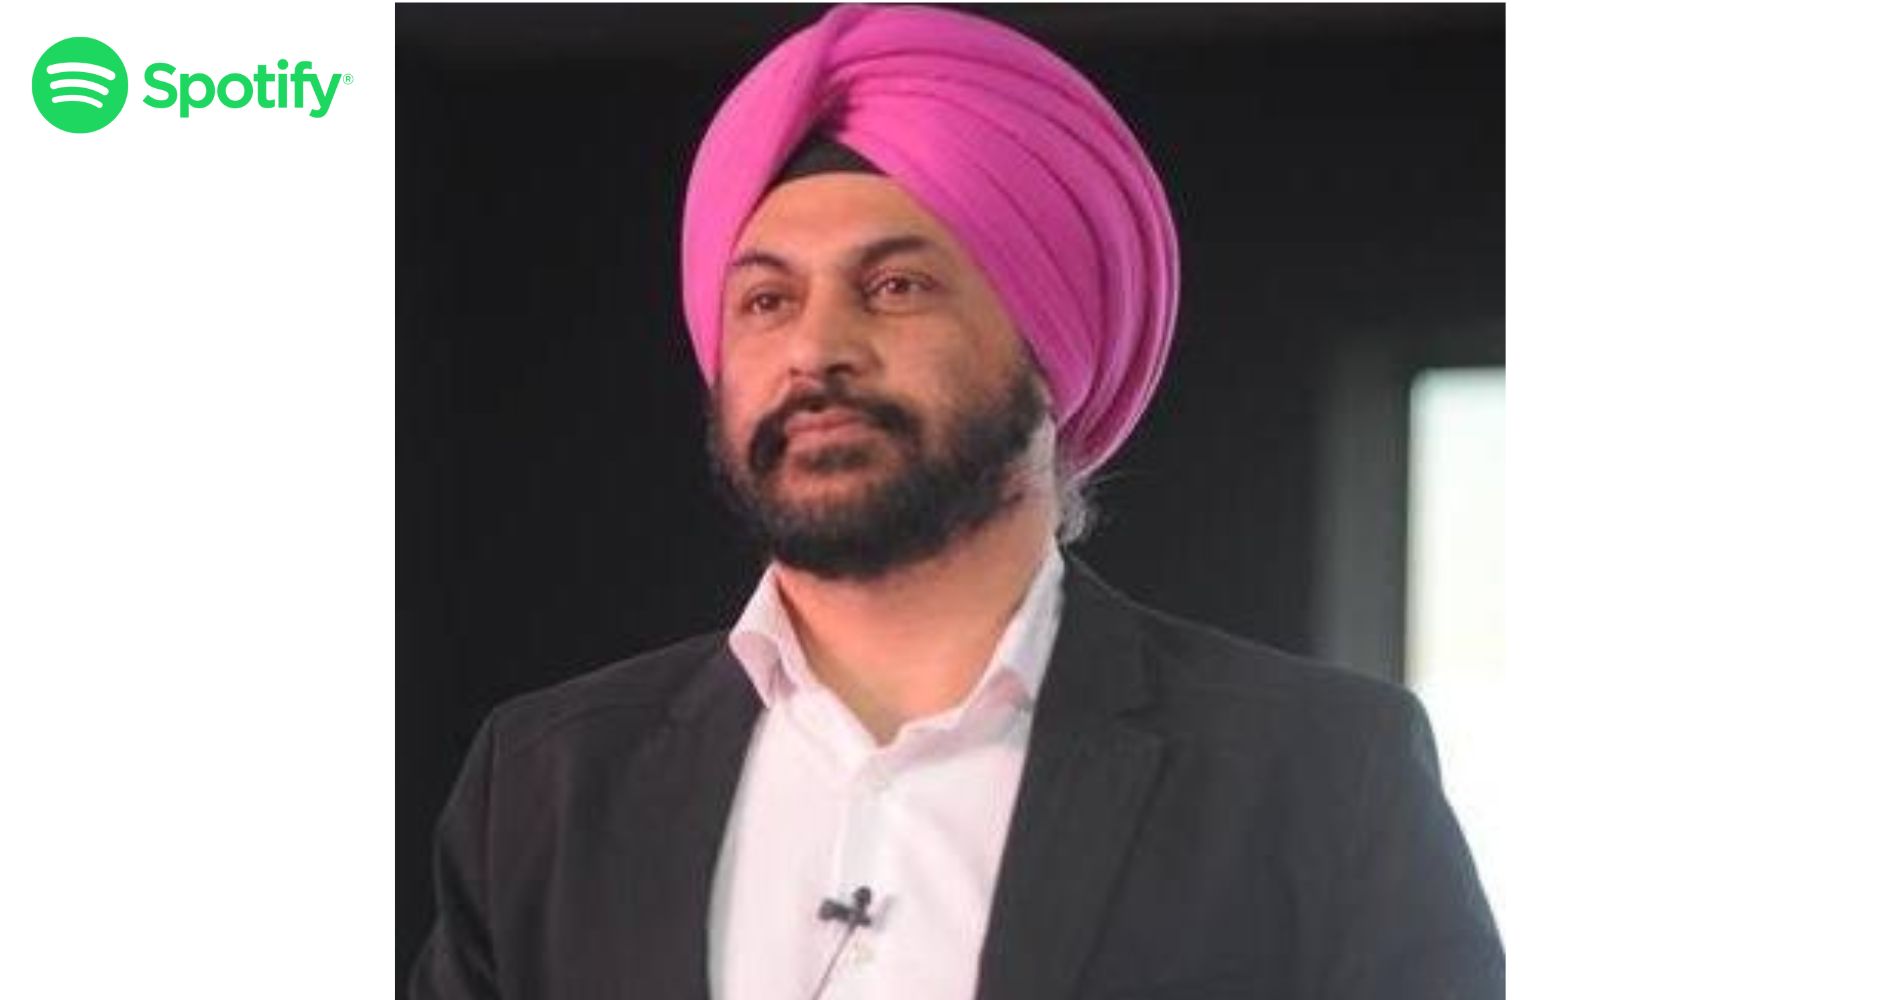 Amarjit Singh Batra Marks Six Years Of Leadership At Spotify